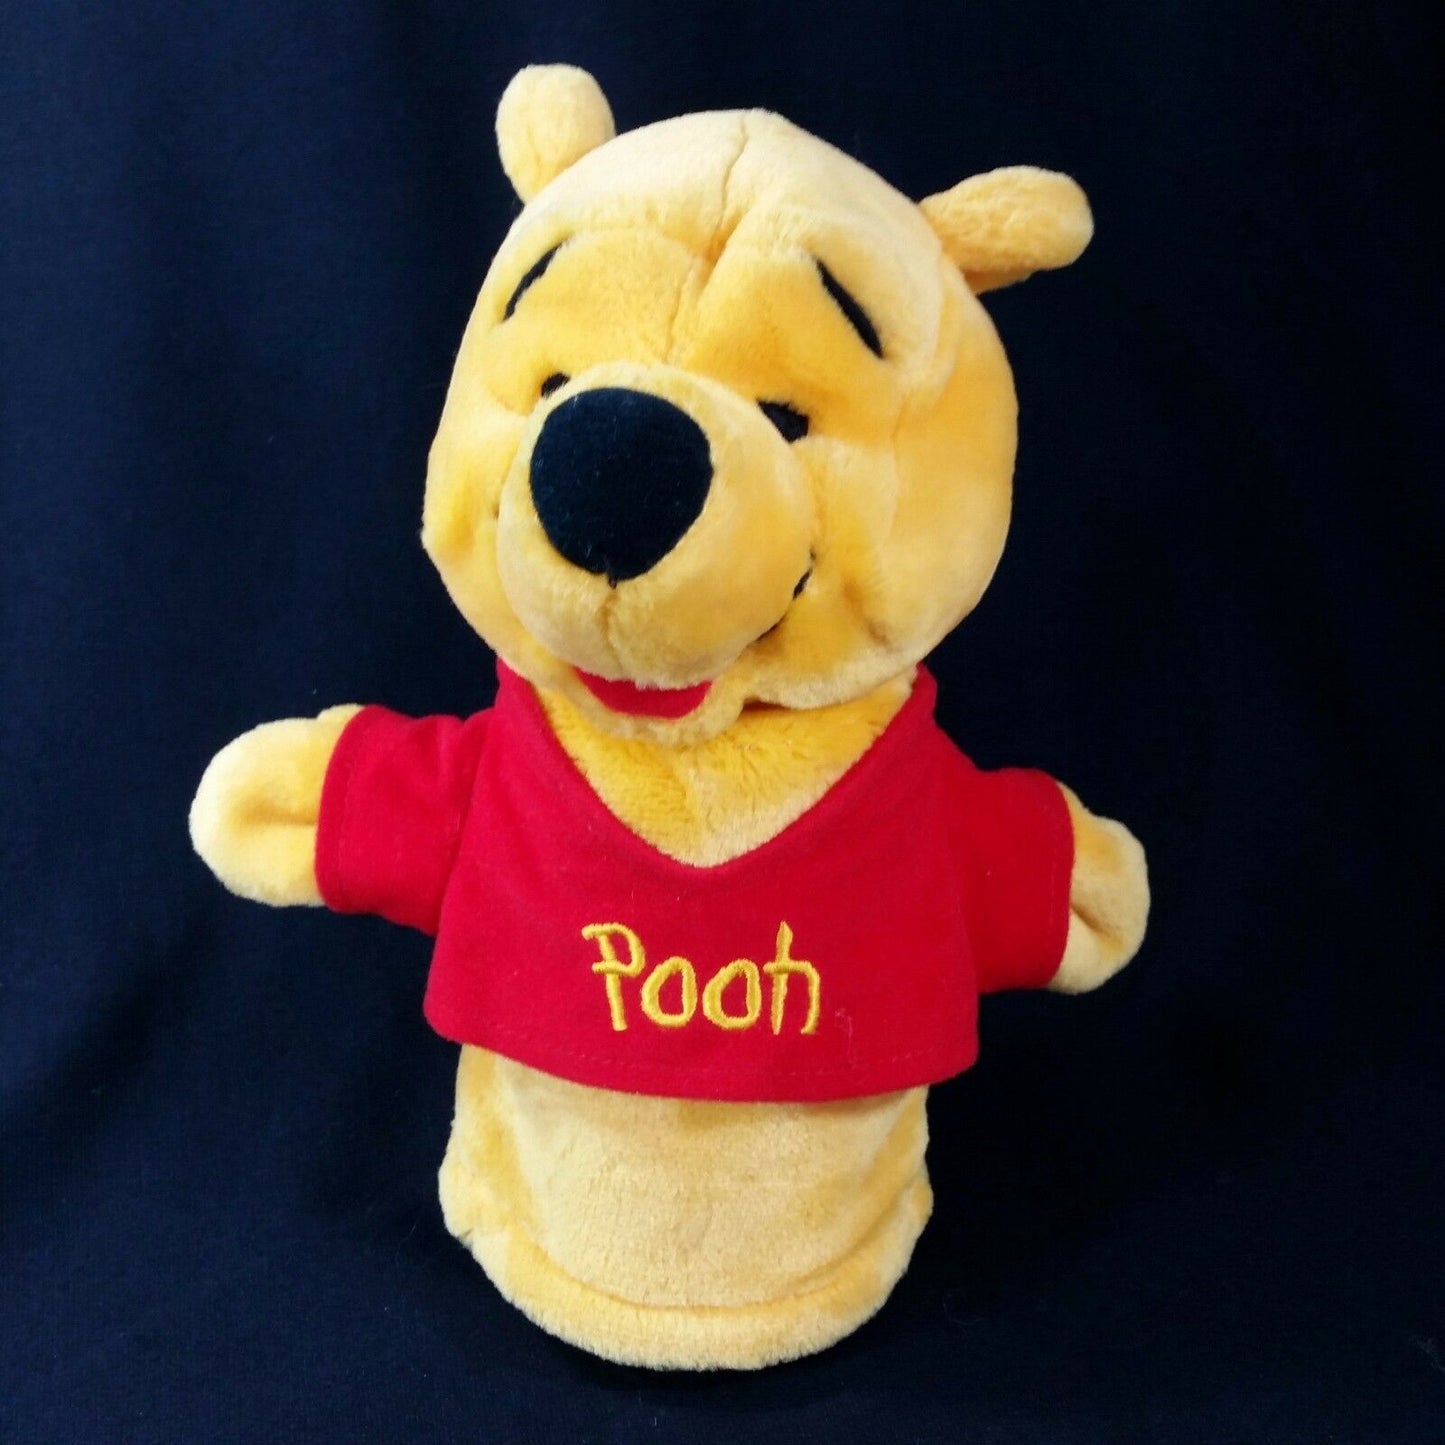 Winnie the Pooh Bear Puppet Plush Stuffed Animal Disney Mattel Toy Doll - At Grandma's Table